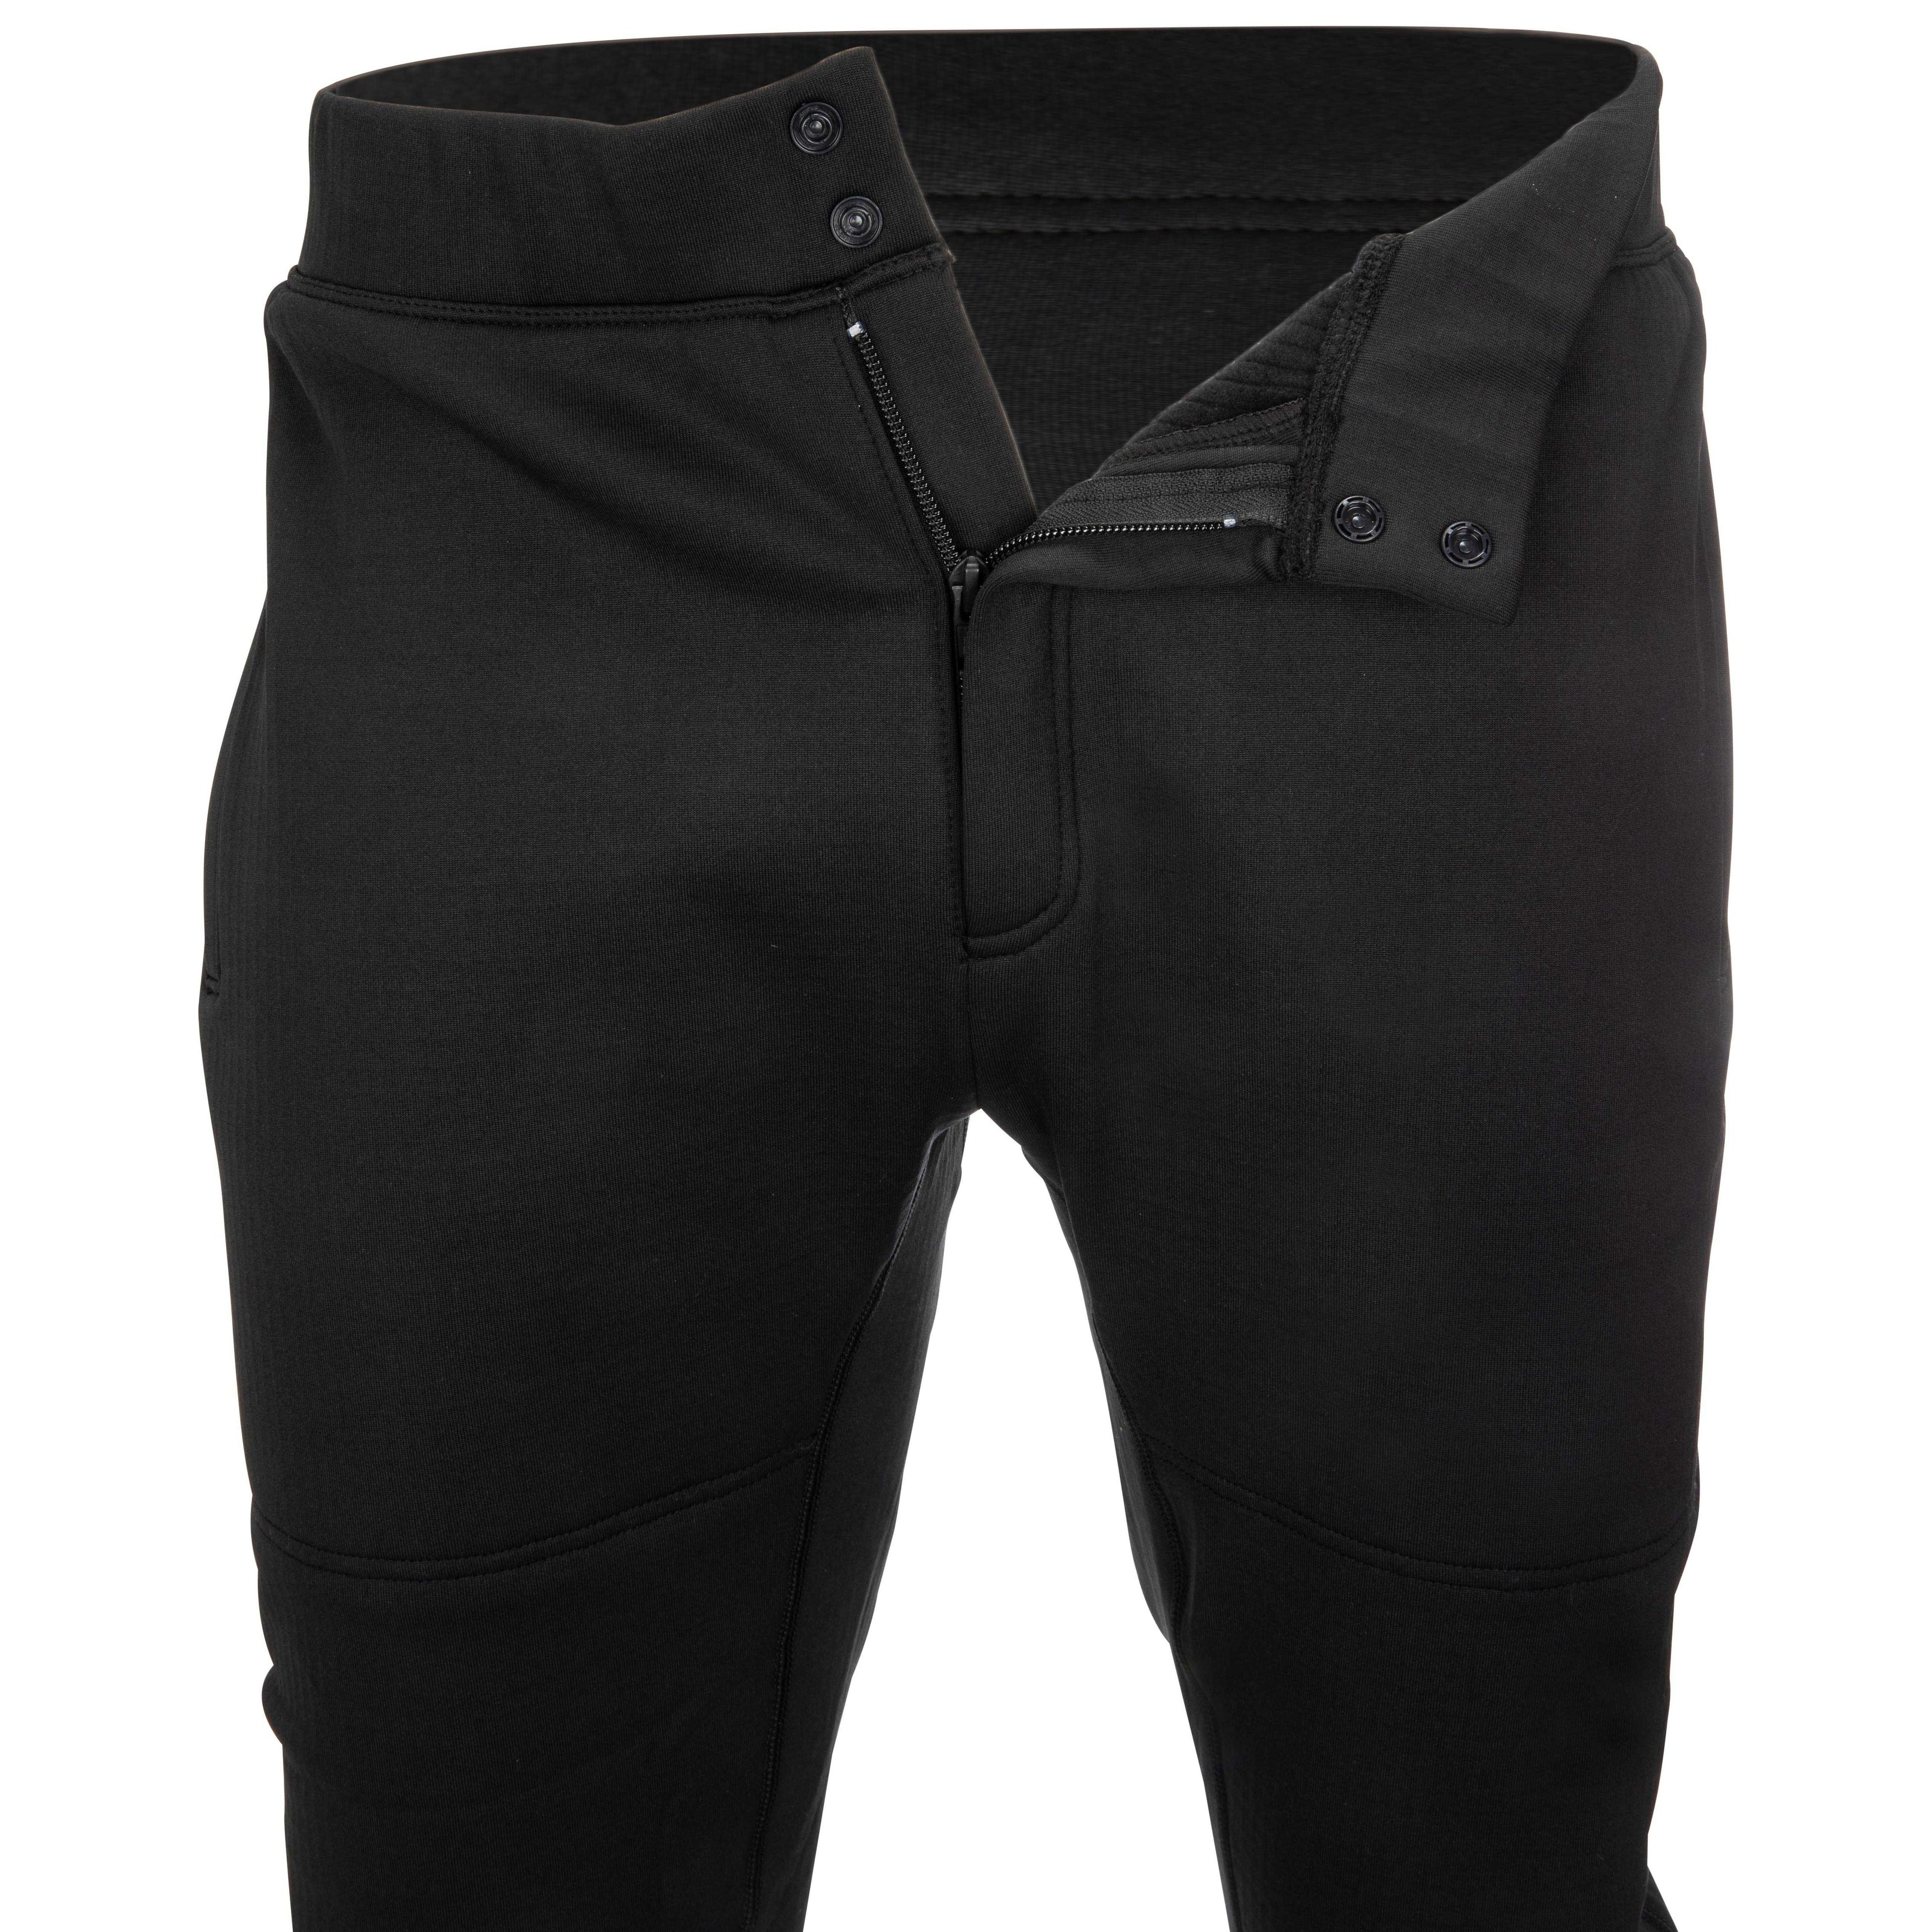 Simms Thermal Pants Black Image 1